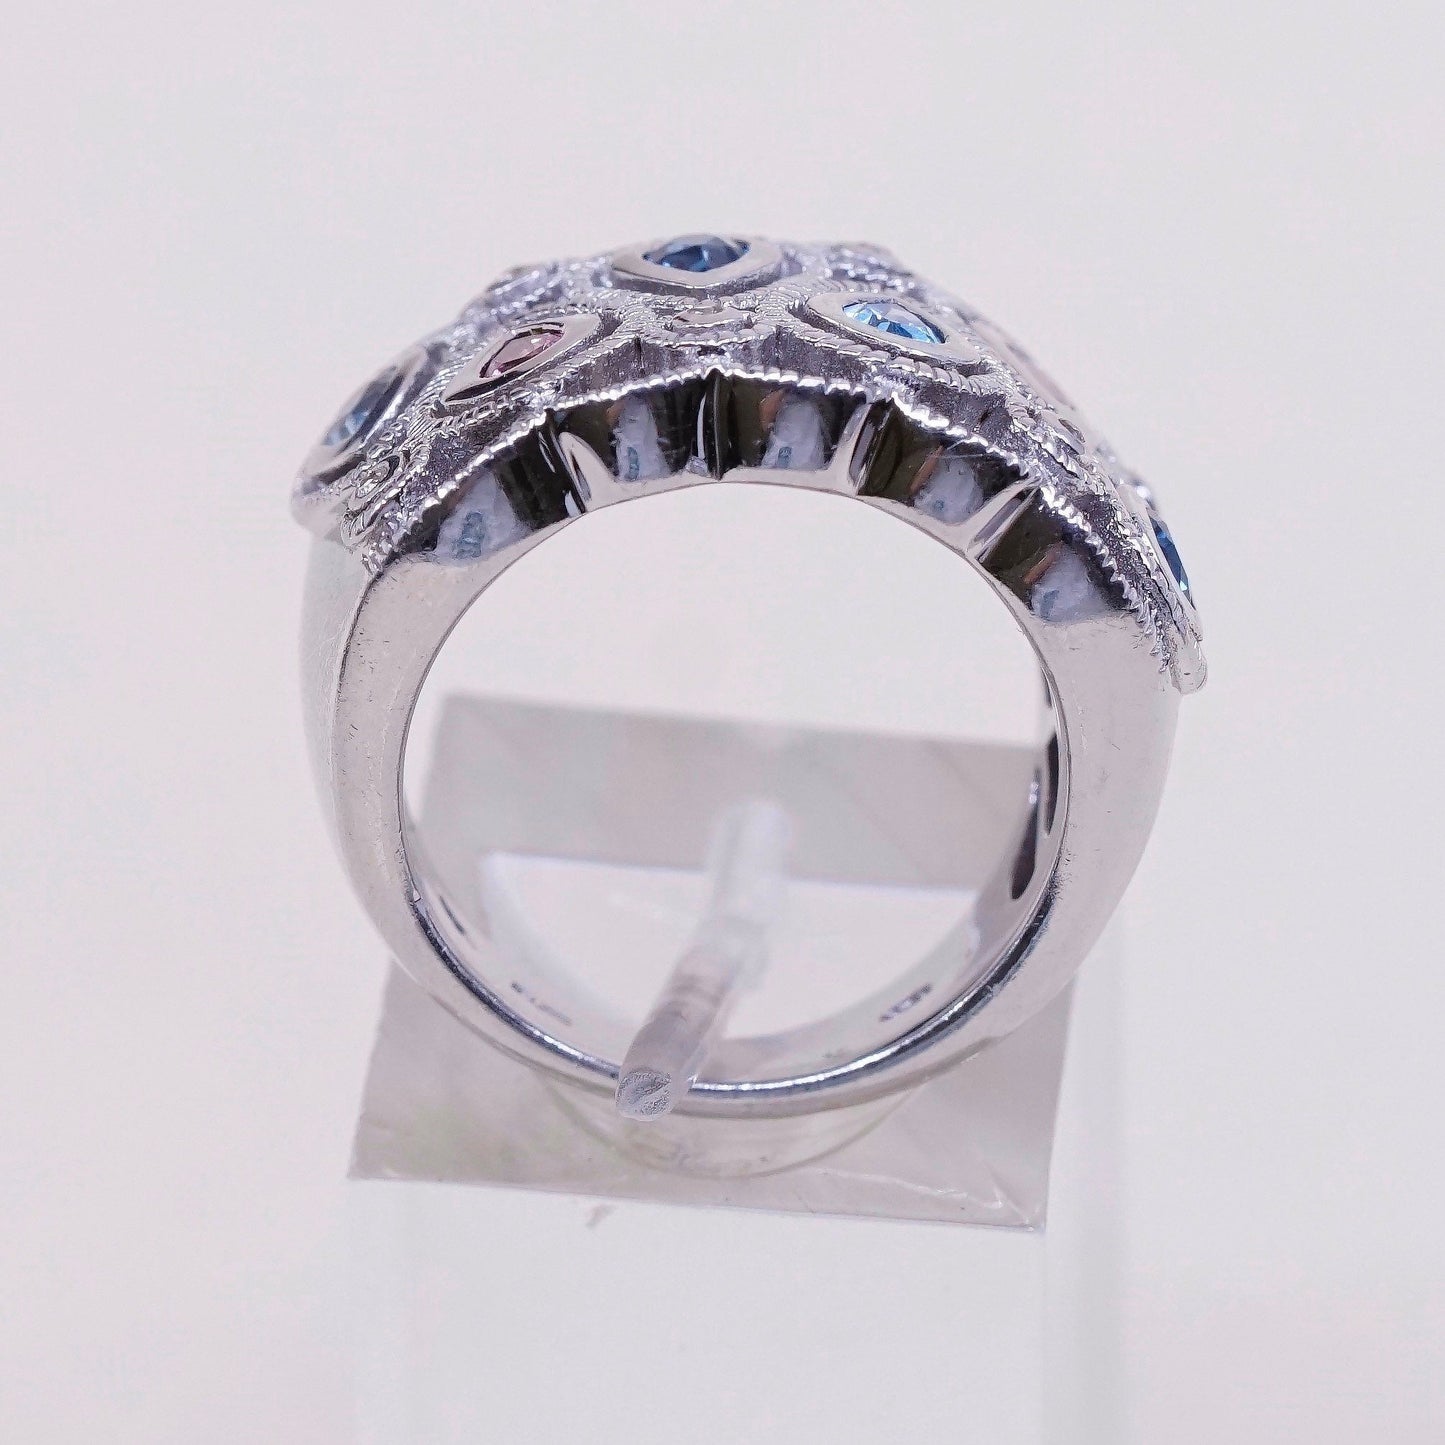 sz 6, sterling silver handmade ring band w/ teardrop topaz N genuine diamond